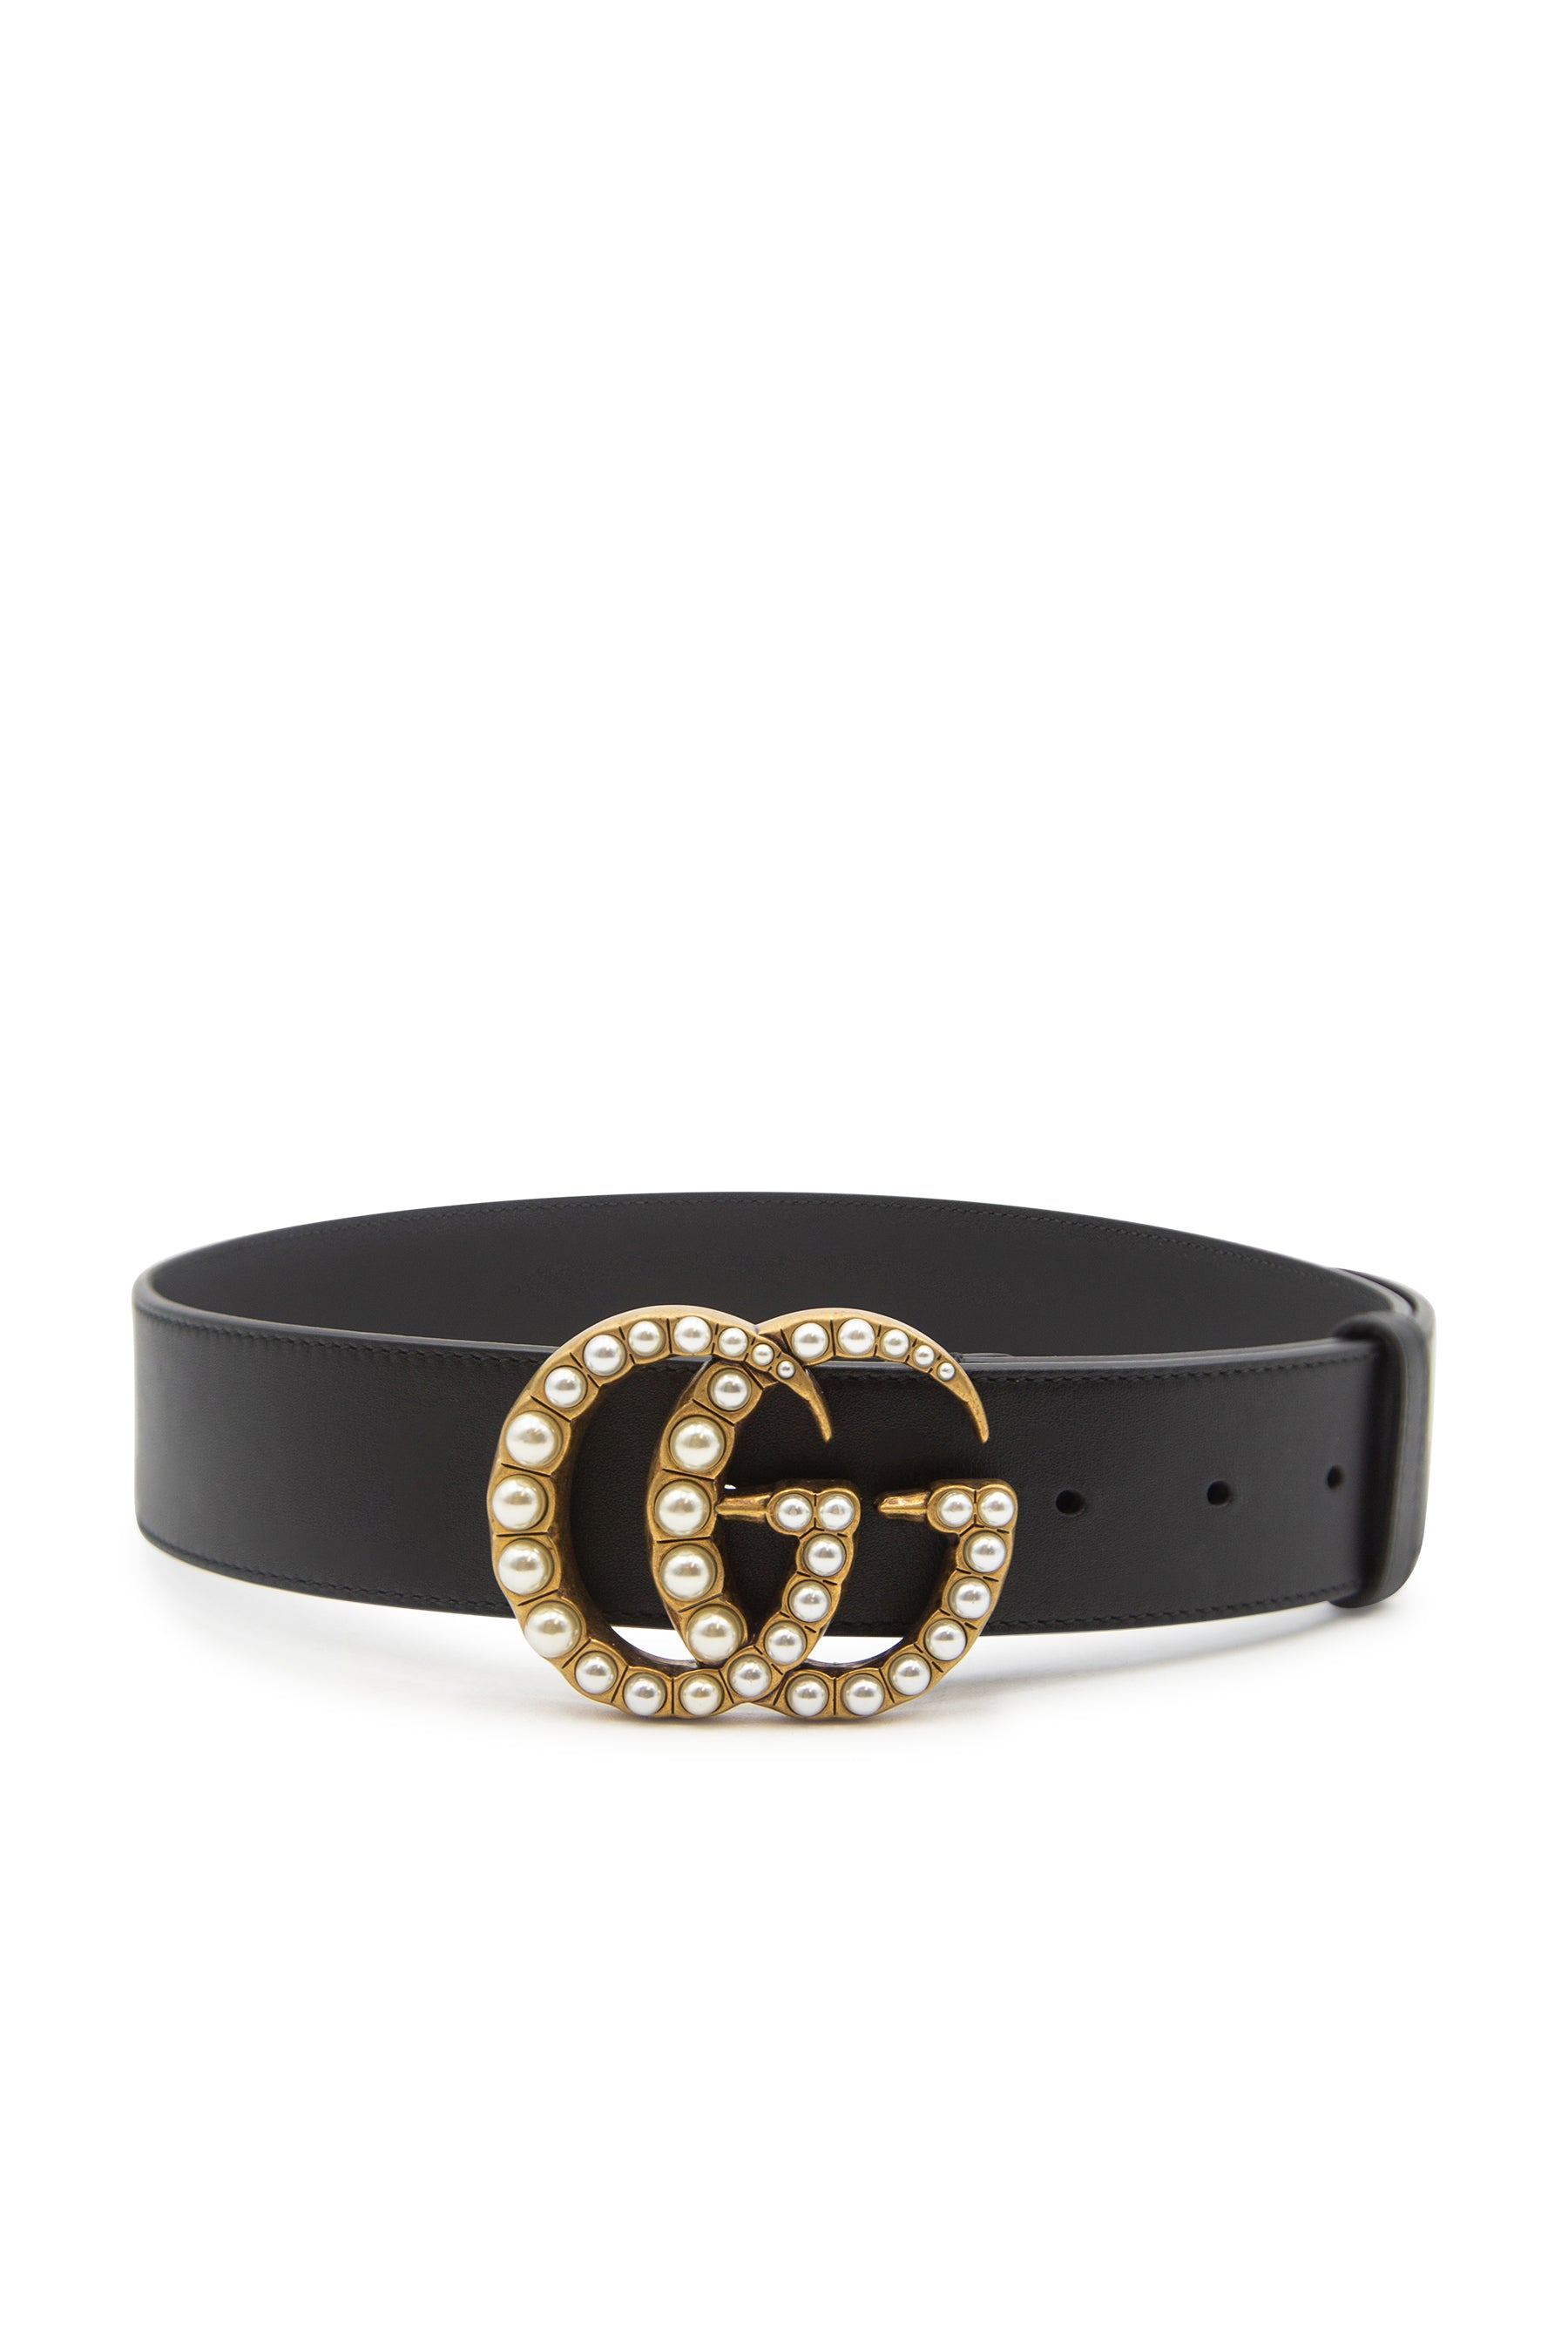 Gucci Black GG Marmont Loafers – BlackSkinny